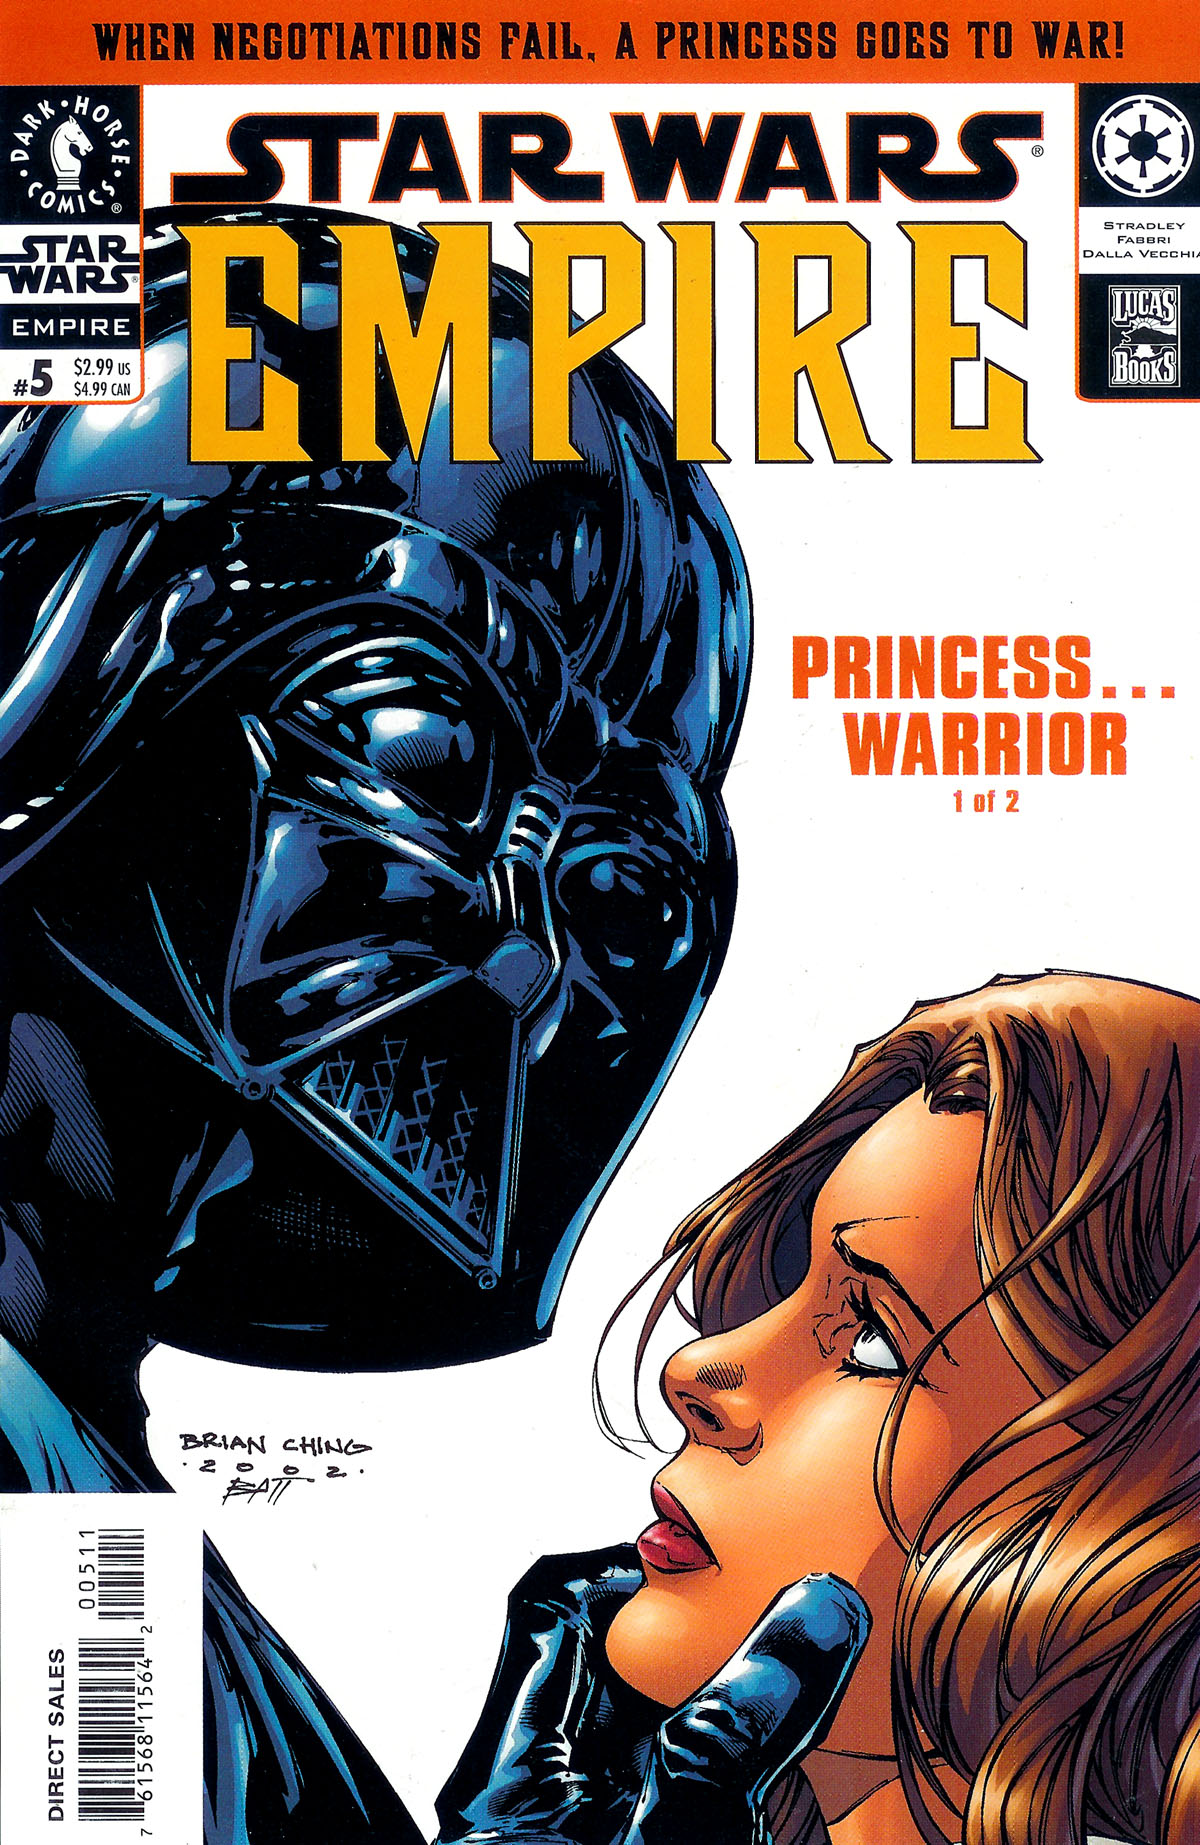 Plik:Empire5.jpg